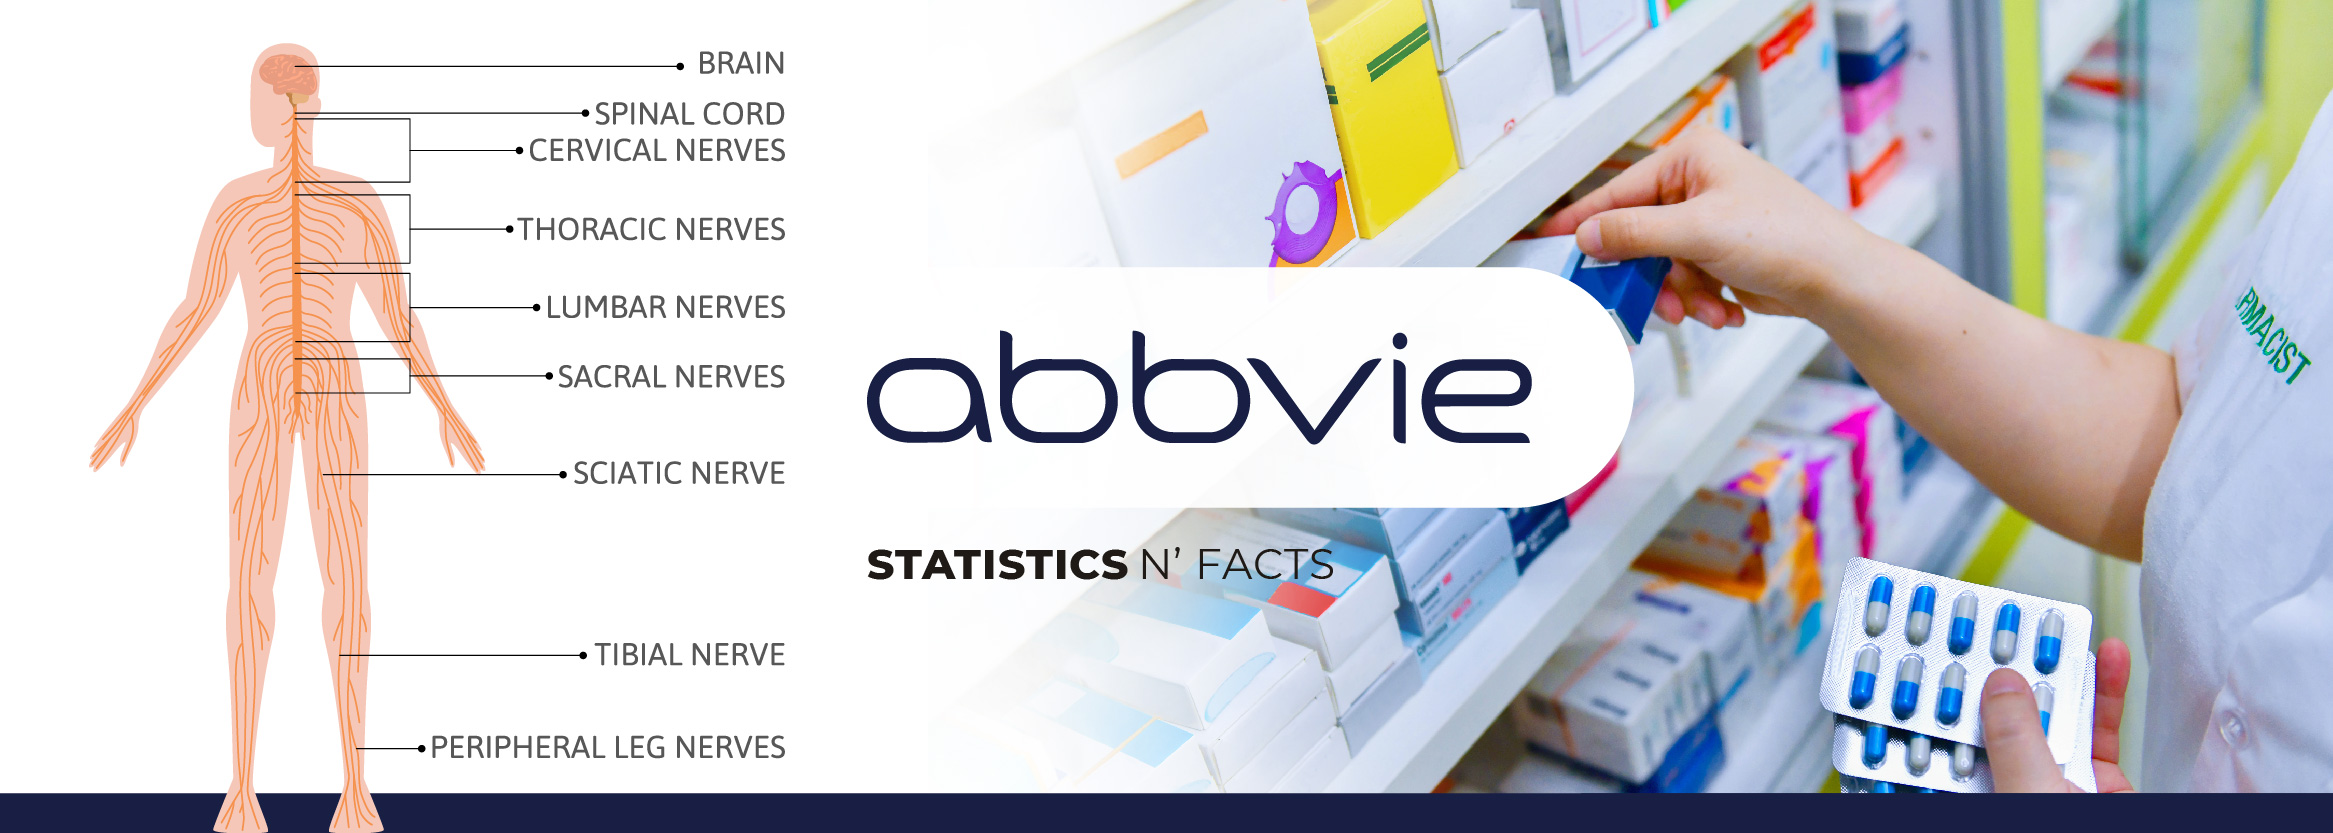 AbbVie Statistics